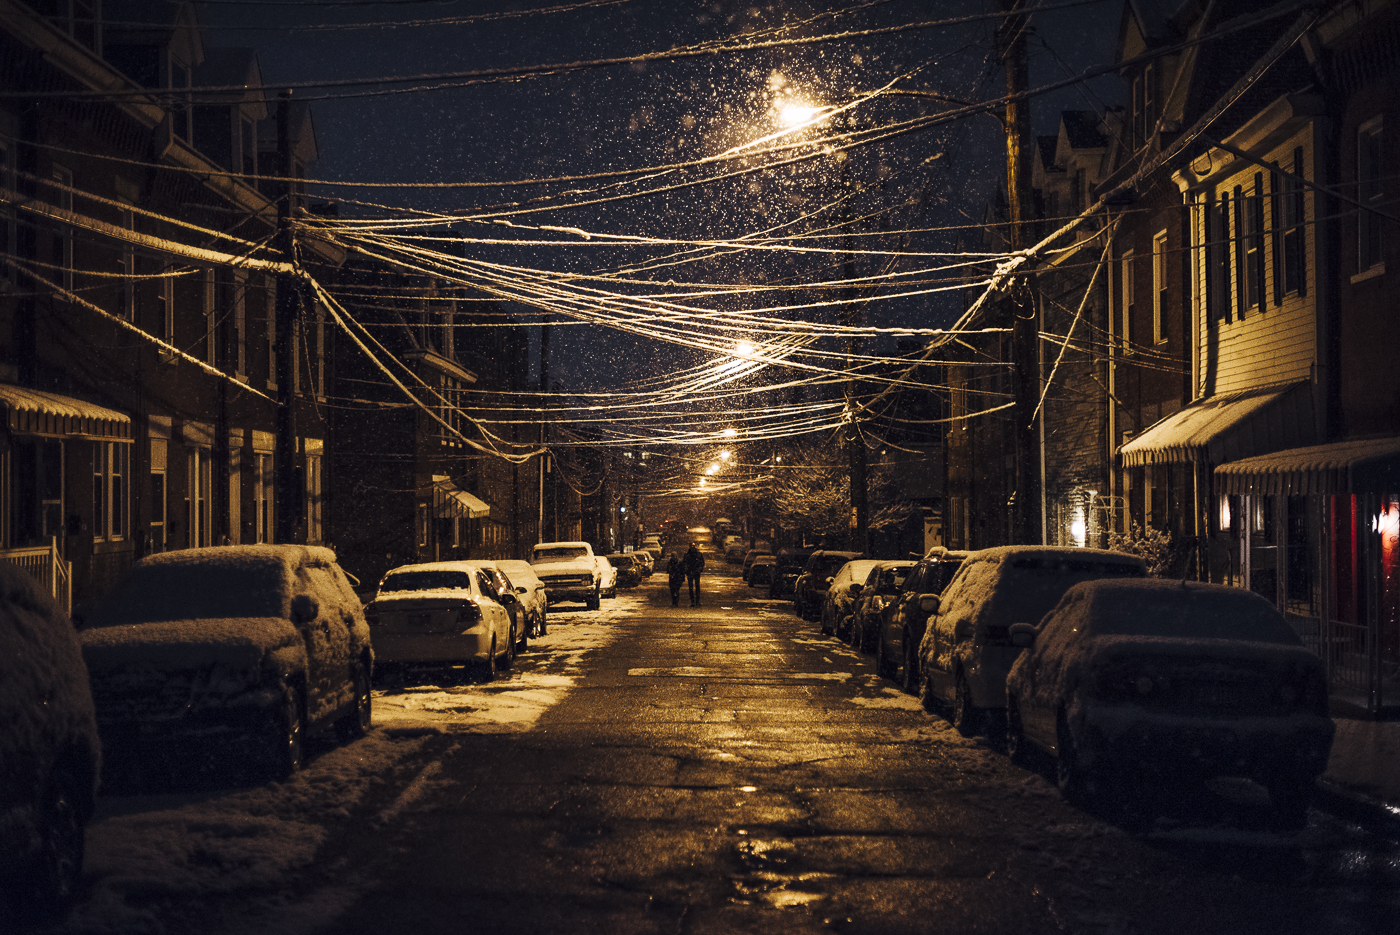 Pittsburgh, Lawrenceville snow night street scene